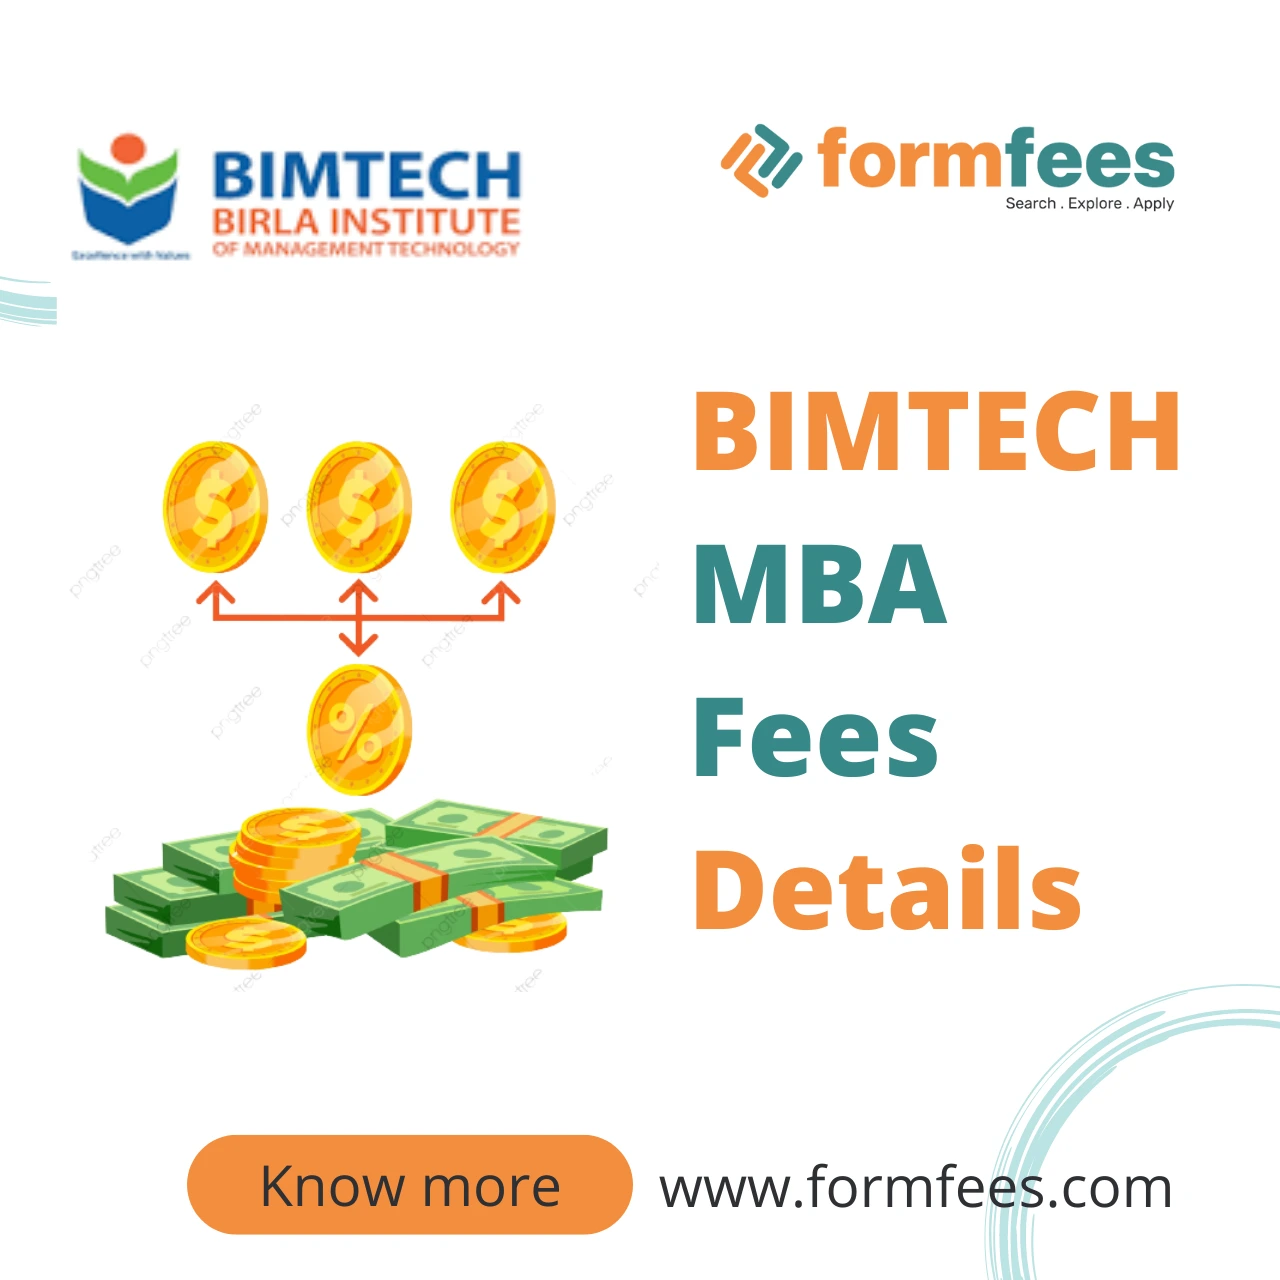 BIMTECH MBA Fees Details